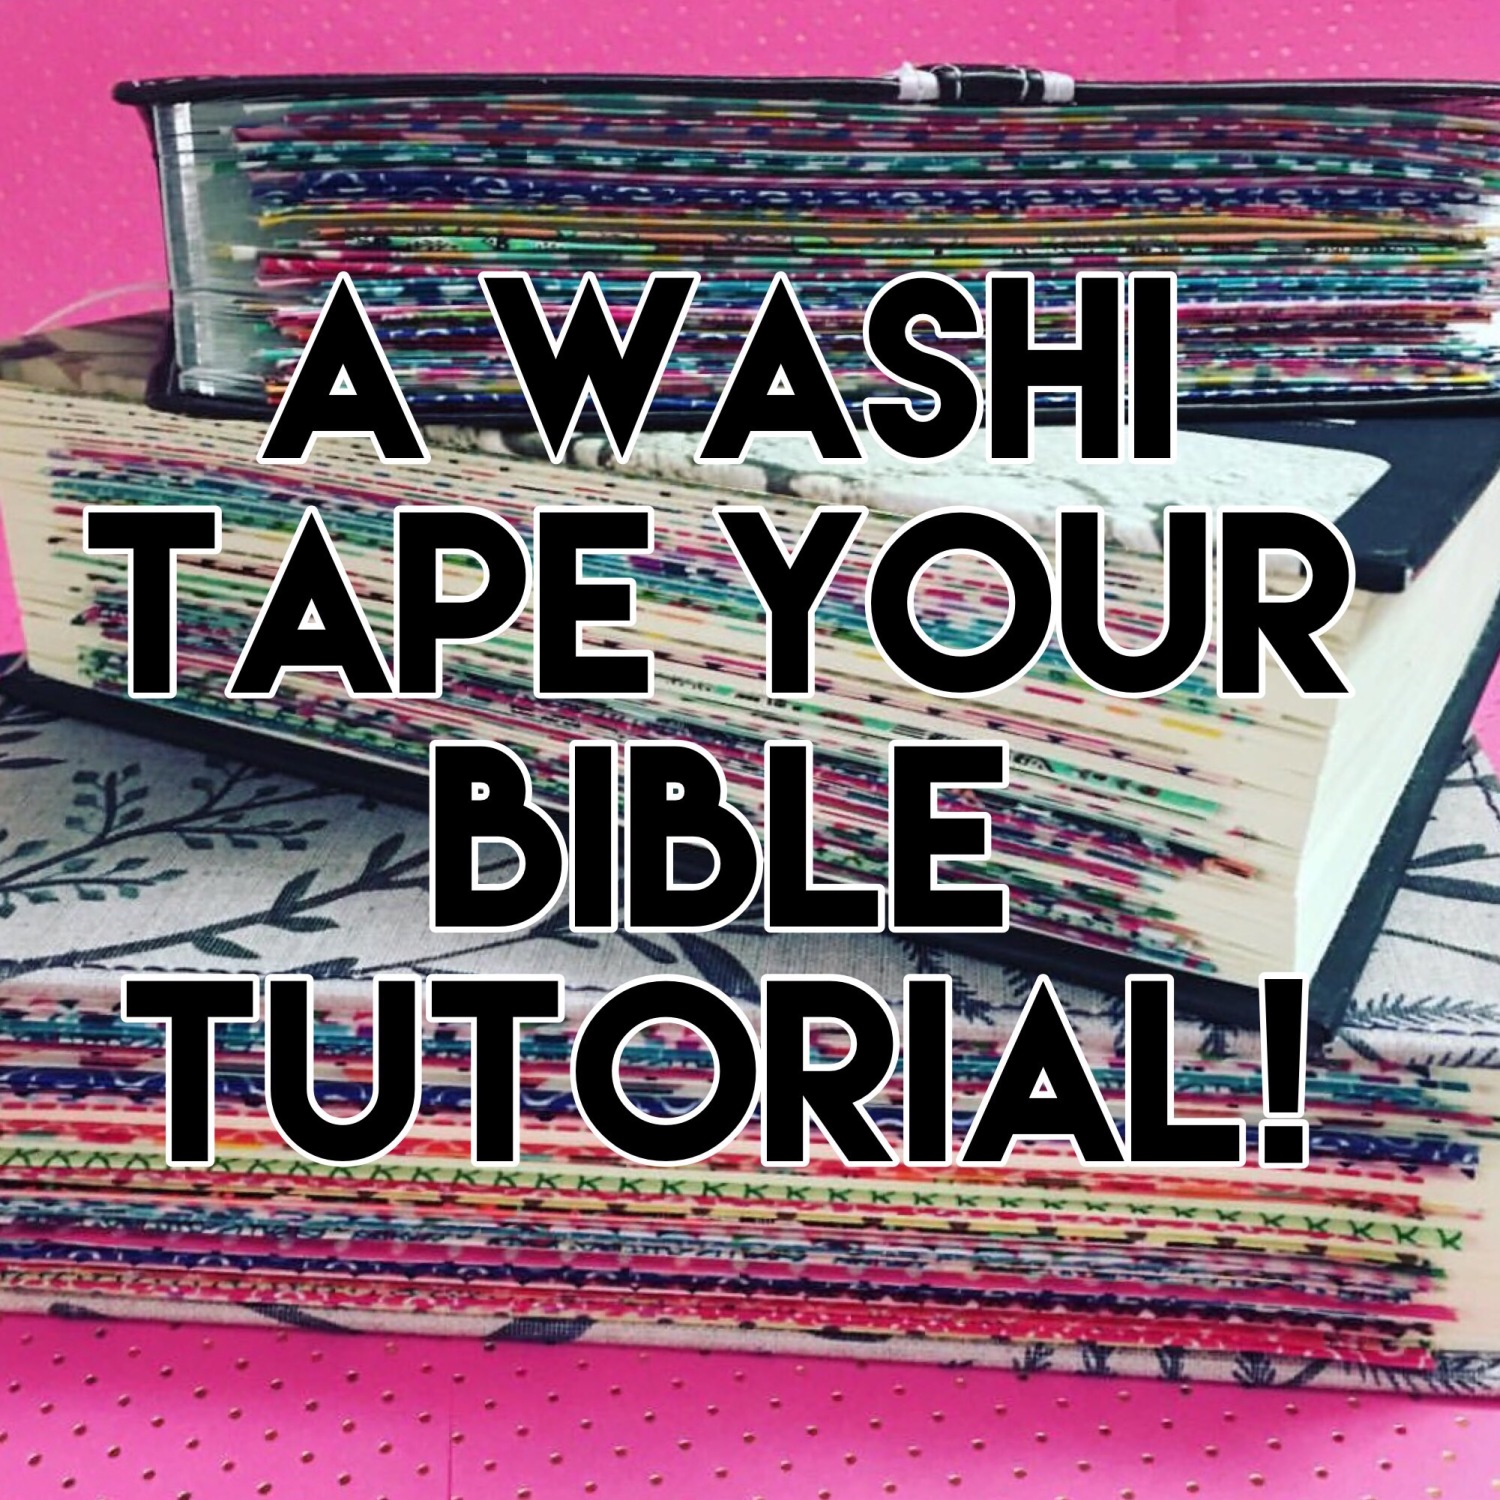 Washi Tape Bible Tabbing –